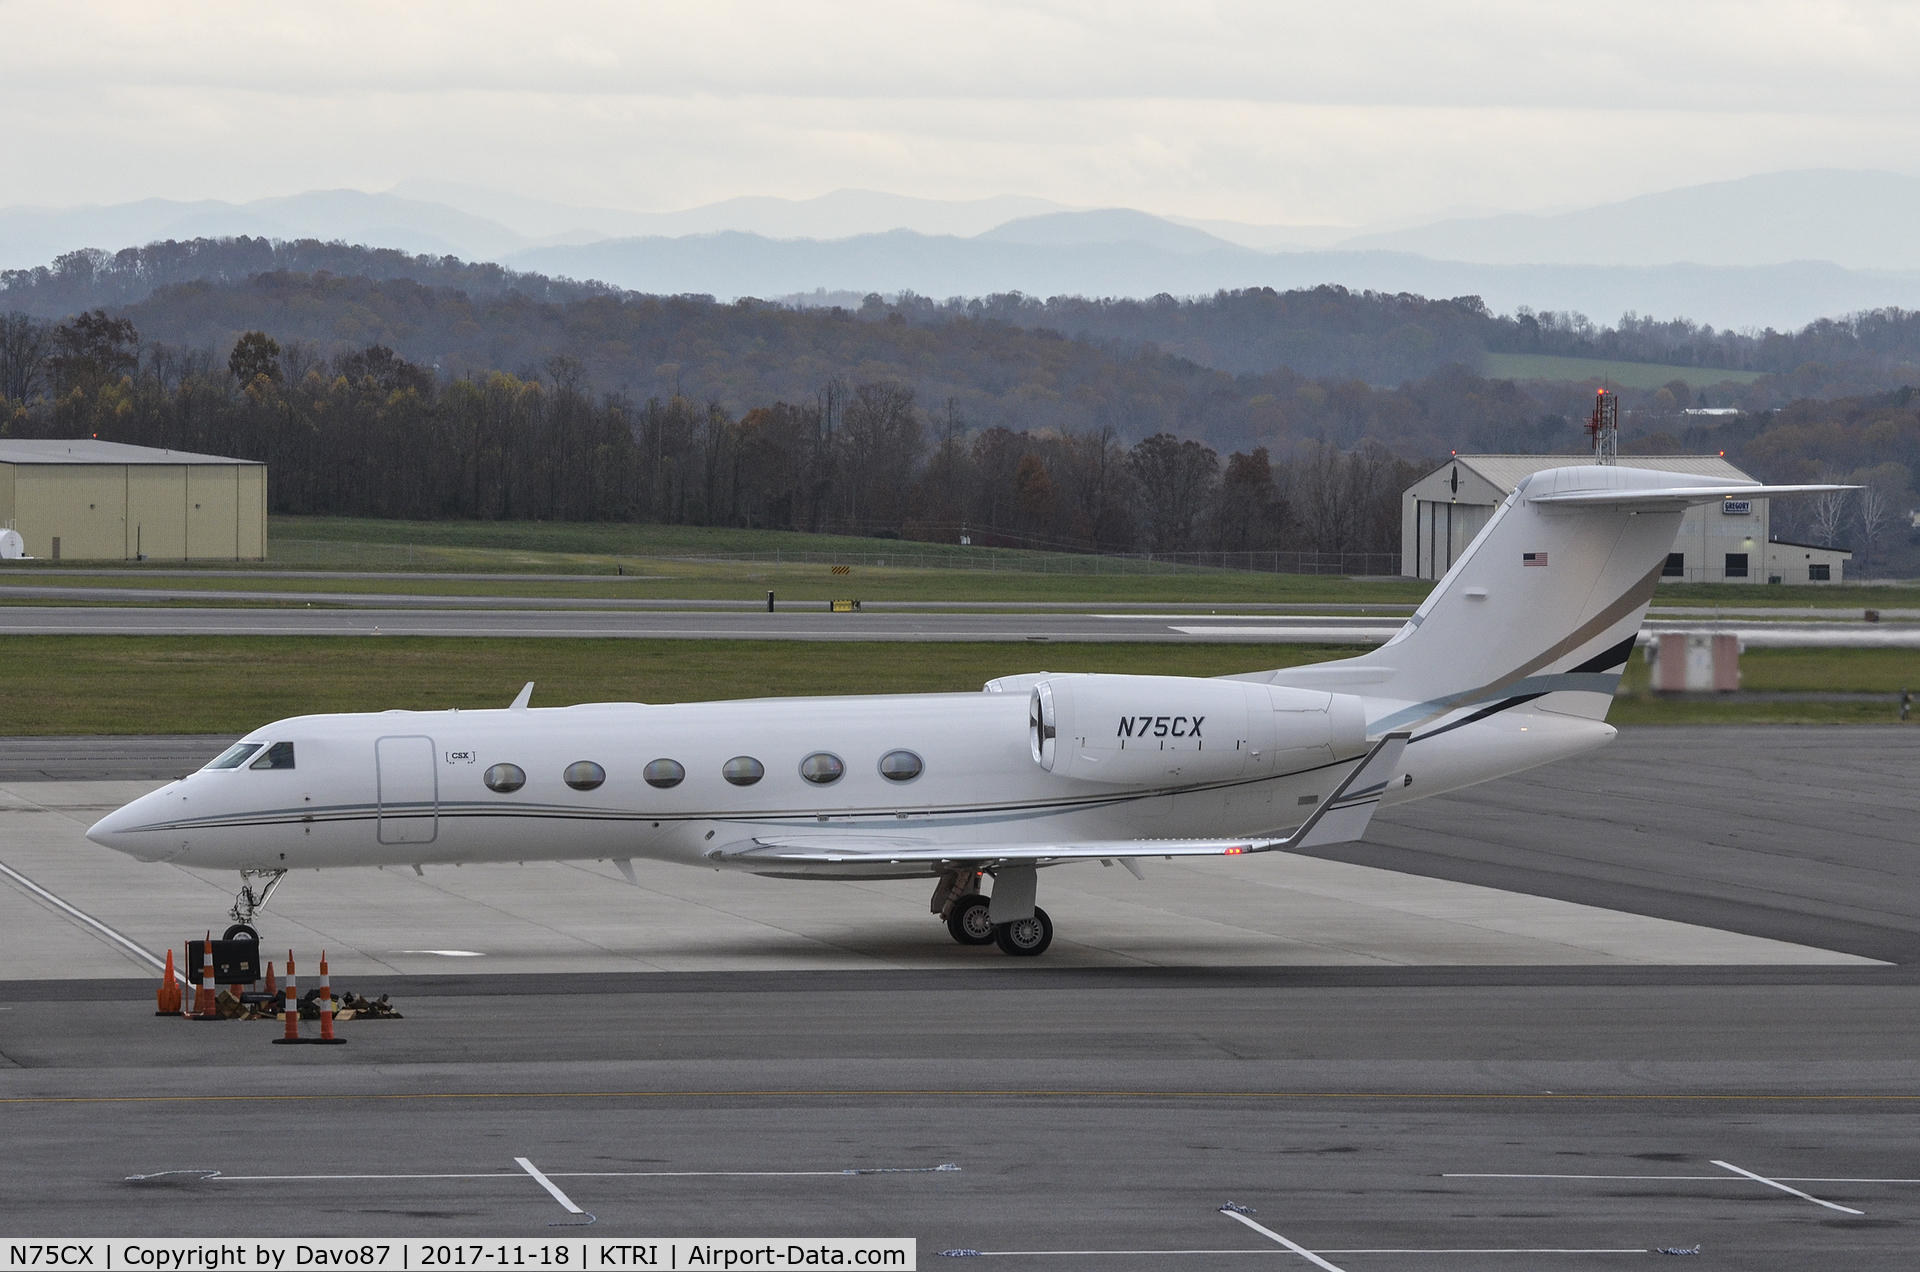 N75CX, 2013 Gulfstream Aerospace GIV-X (G450) C/N 4296, Parked at Tri-Cities Airport (KTRI) in Blountville, TN.